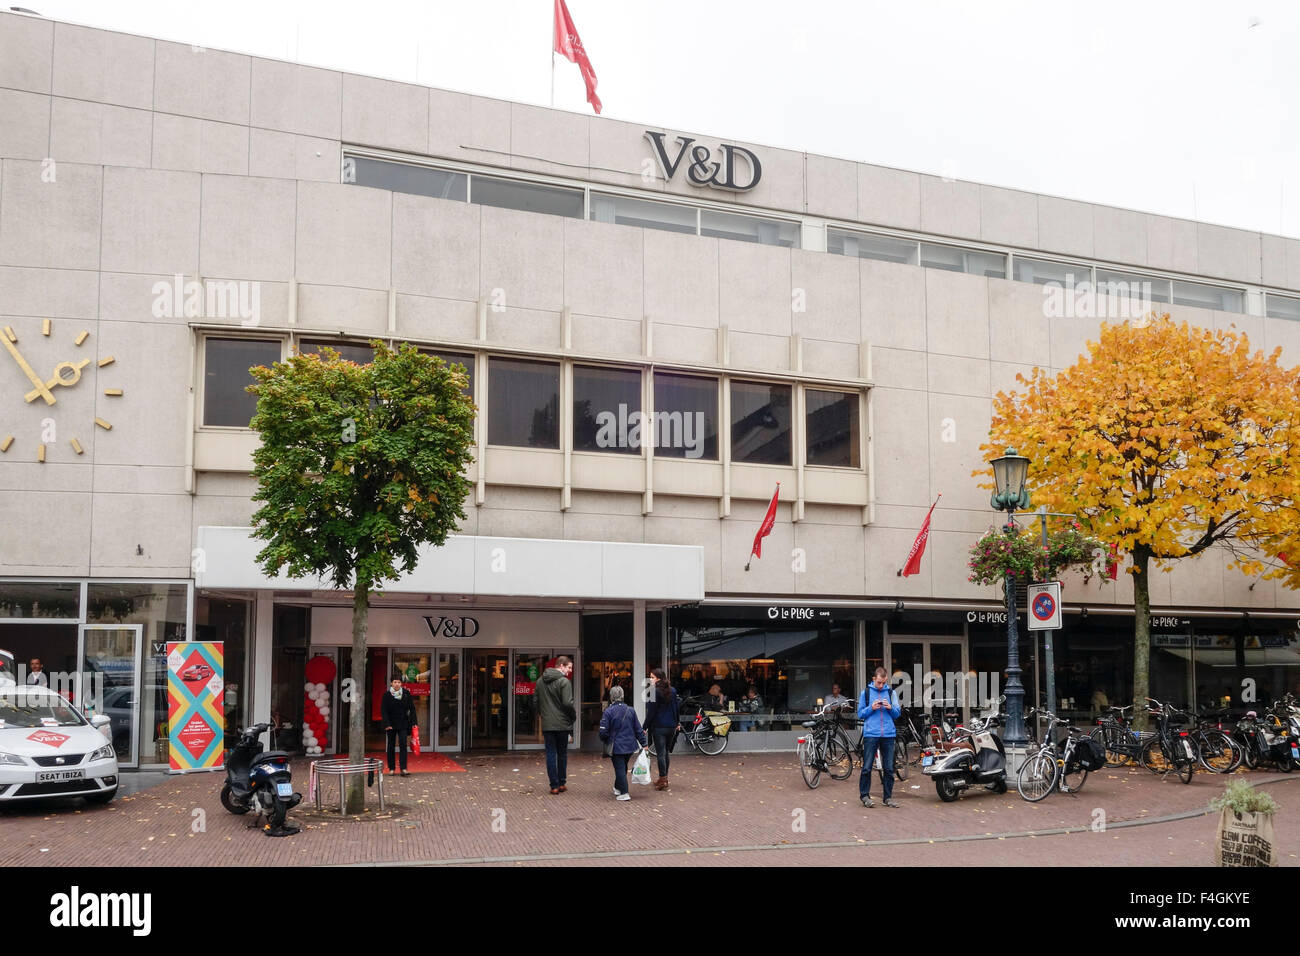 Vroom & Dreesmann, V&D, Dutch chain of department stores, Sittard, Limburg, Southern Netherlands. Stock Photo